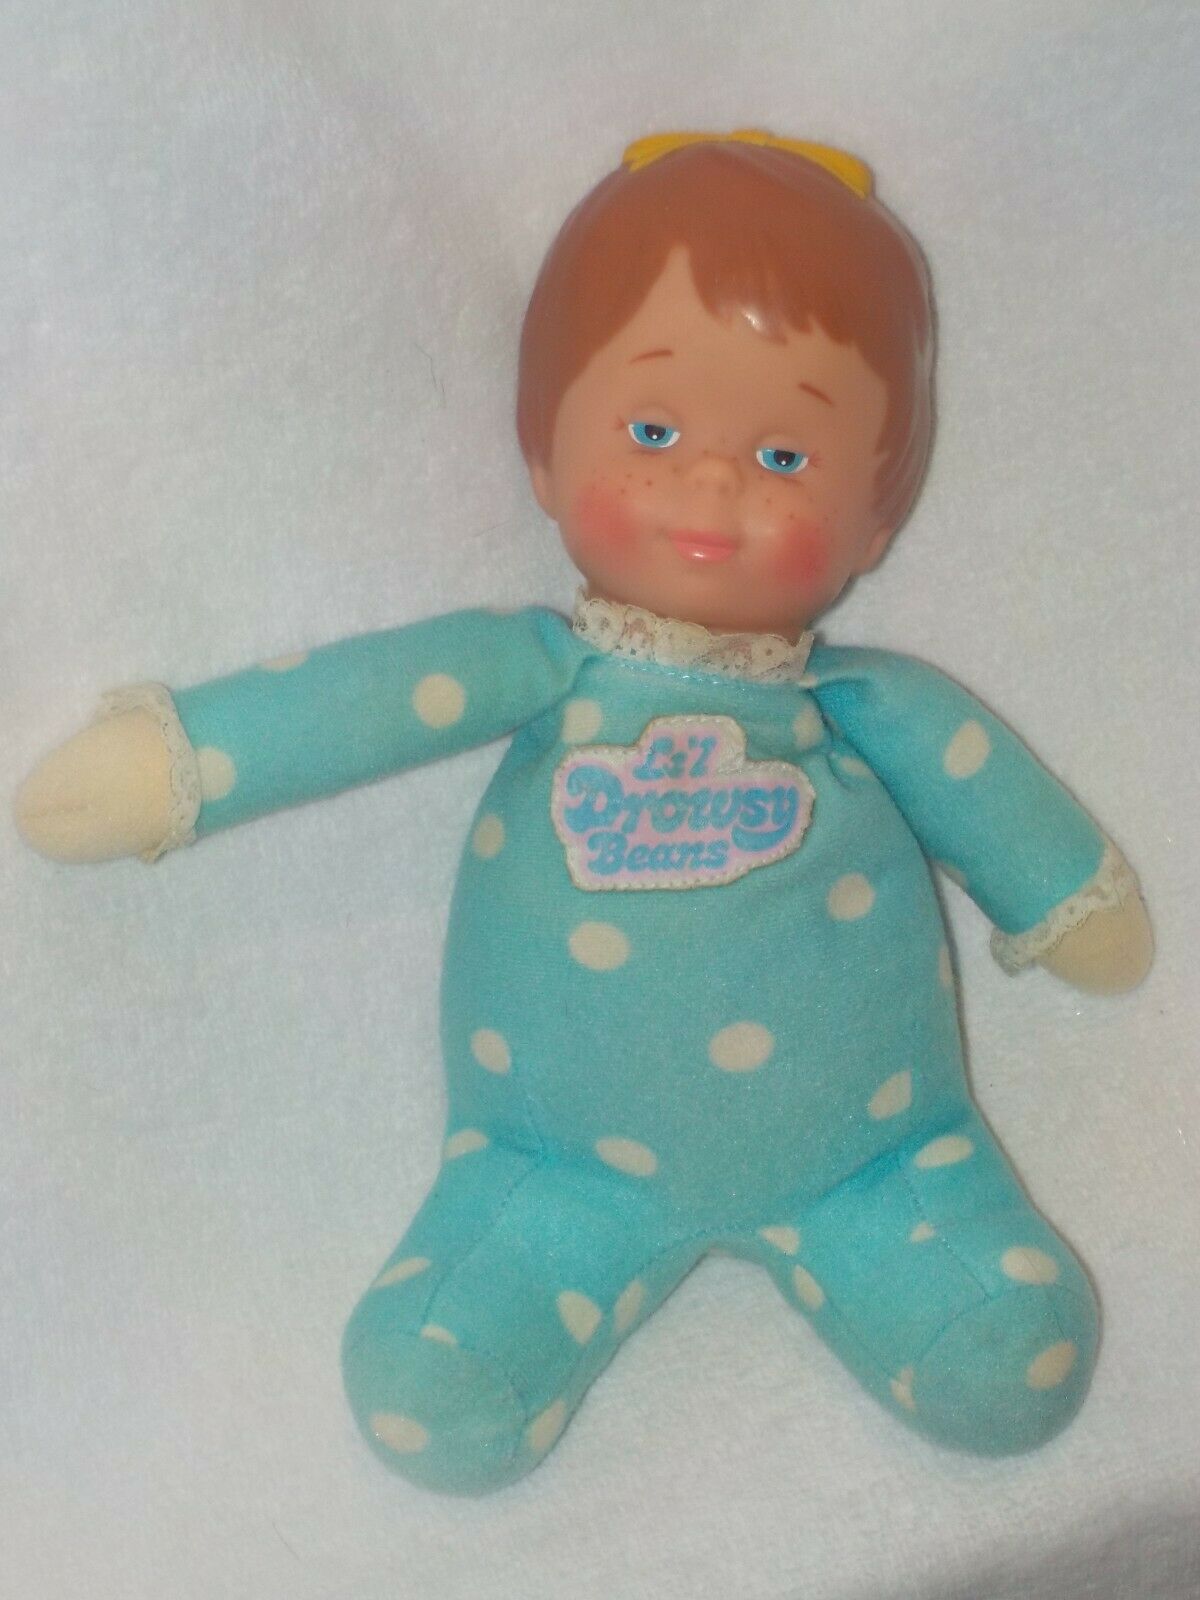 1982 Mattel Lil Drowsy Beans Doll